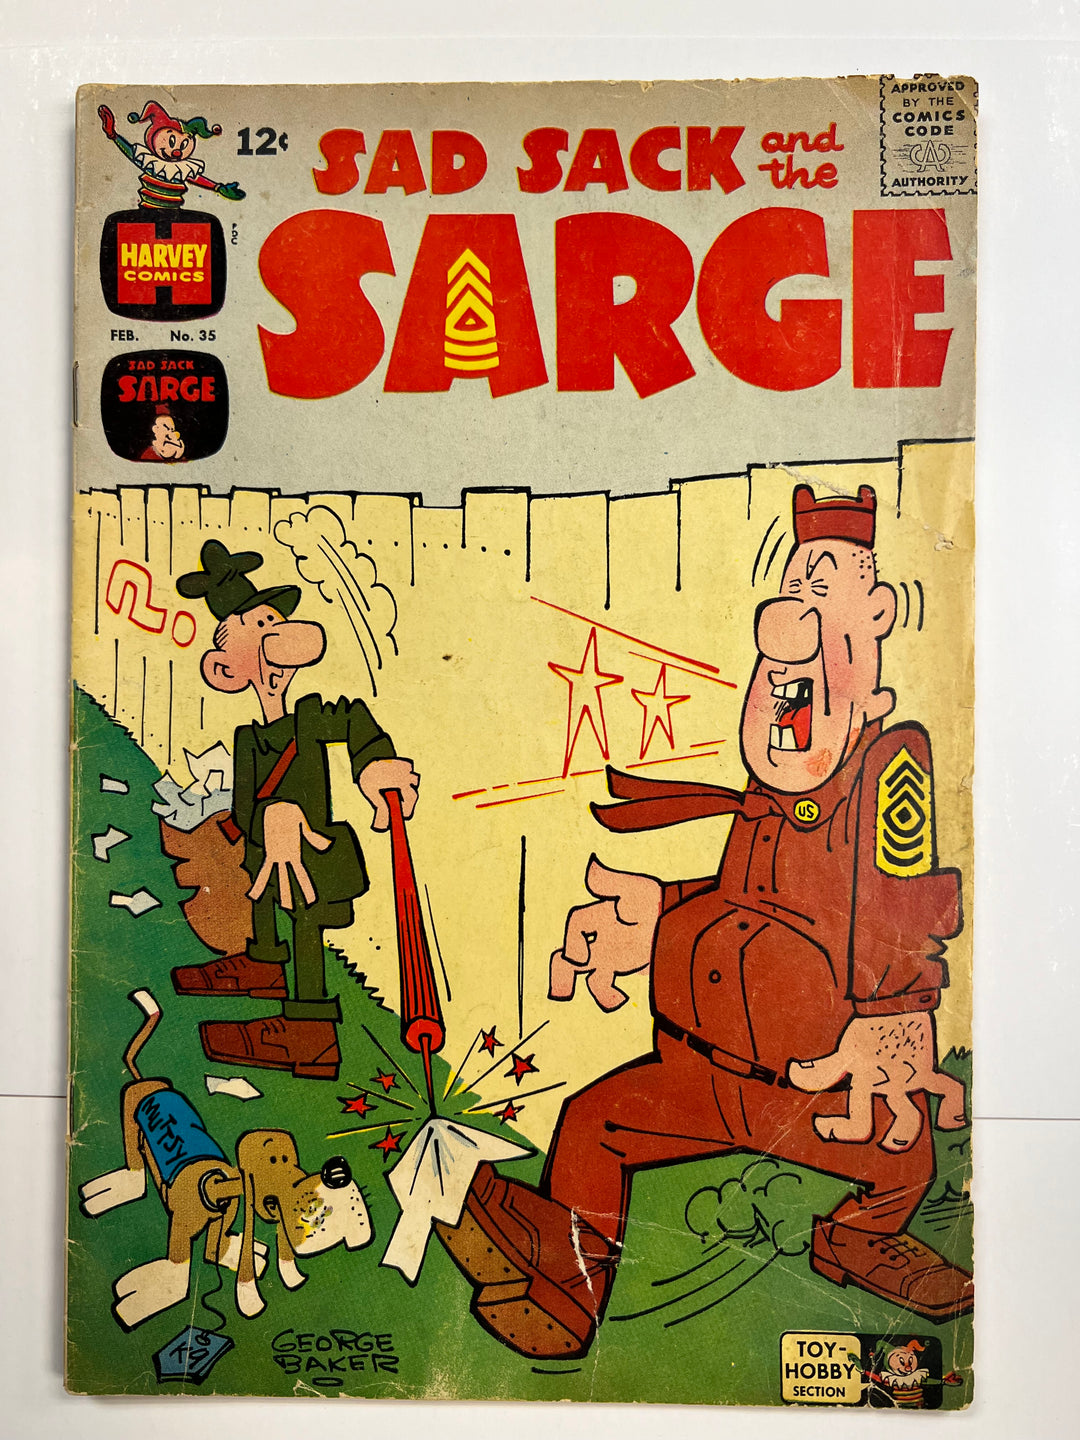 Sad Sack and the Sarge #35 Harvey 1963 G